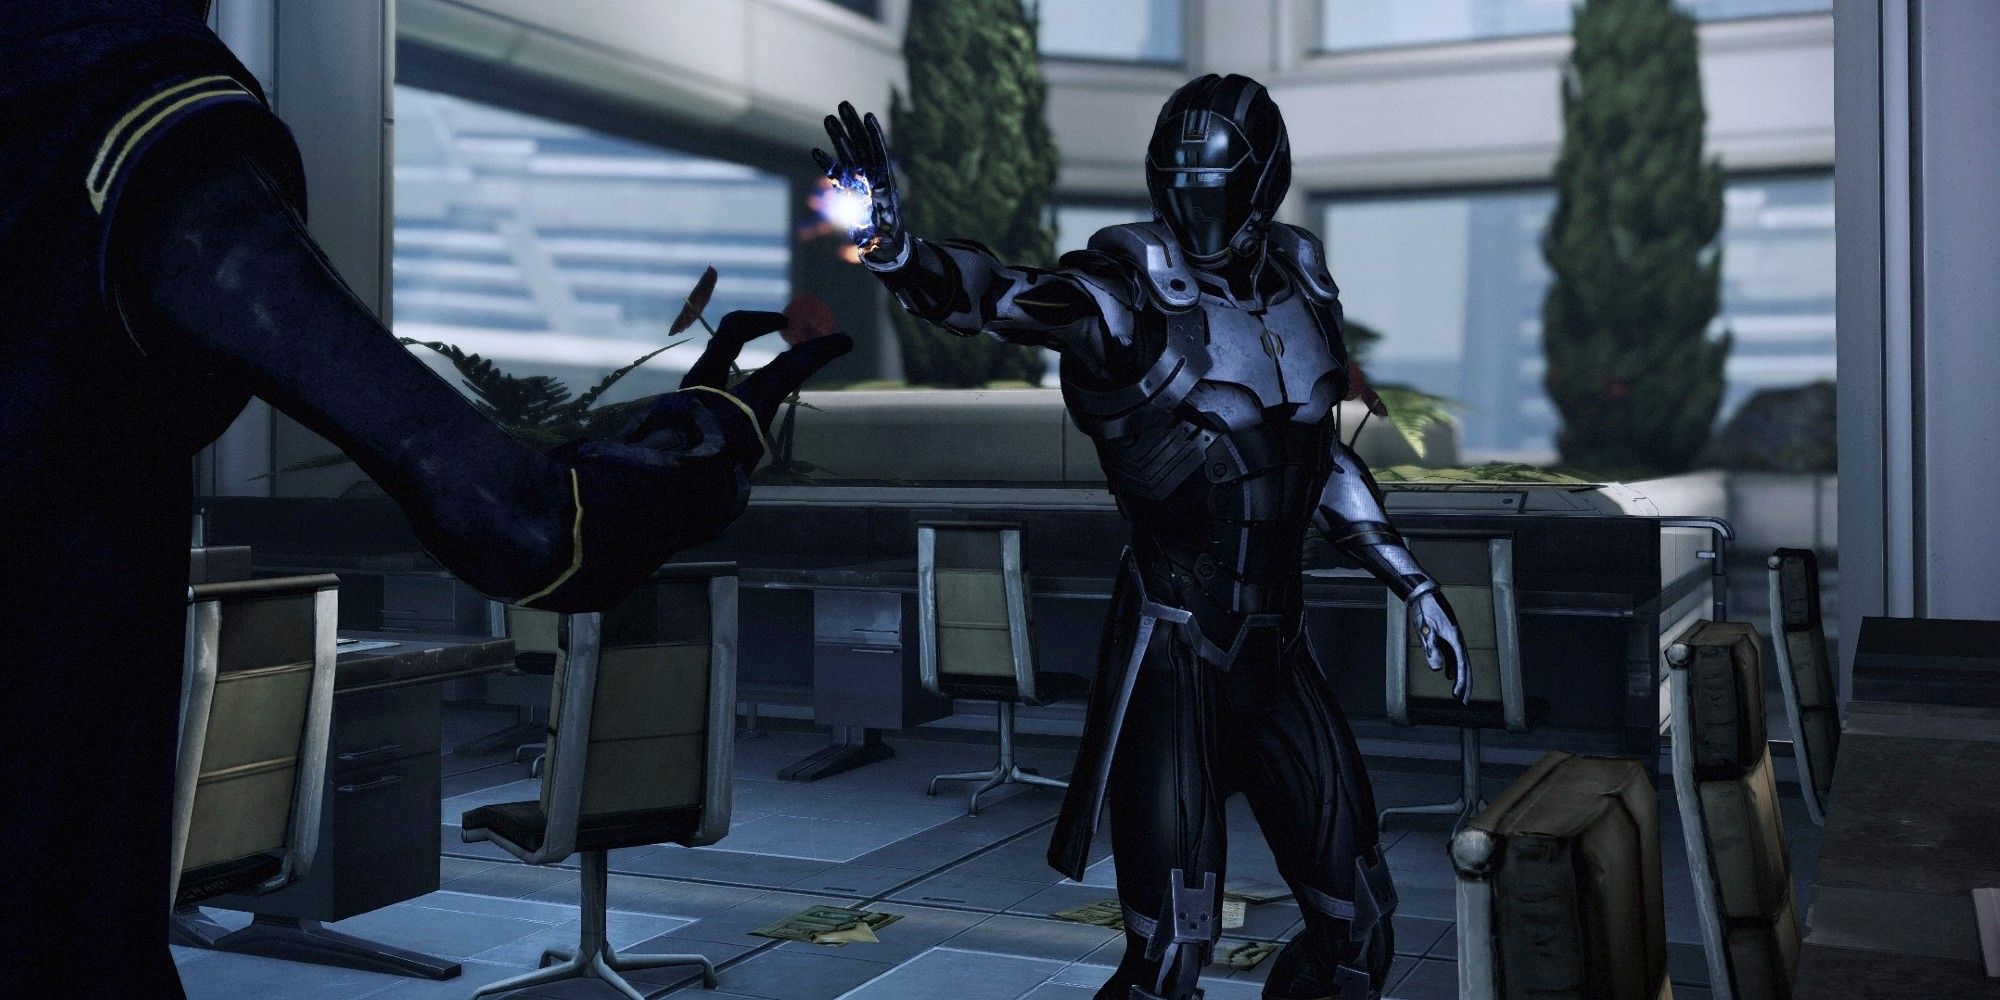 Mass Effect Legendary Edition Mod Changes Kai Leng's Appearance To Phantom